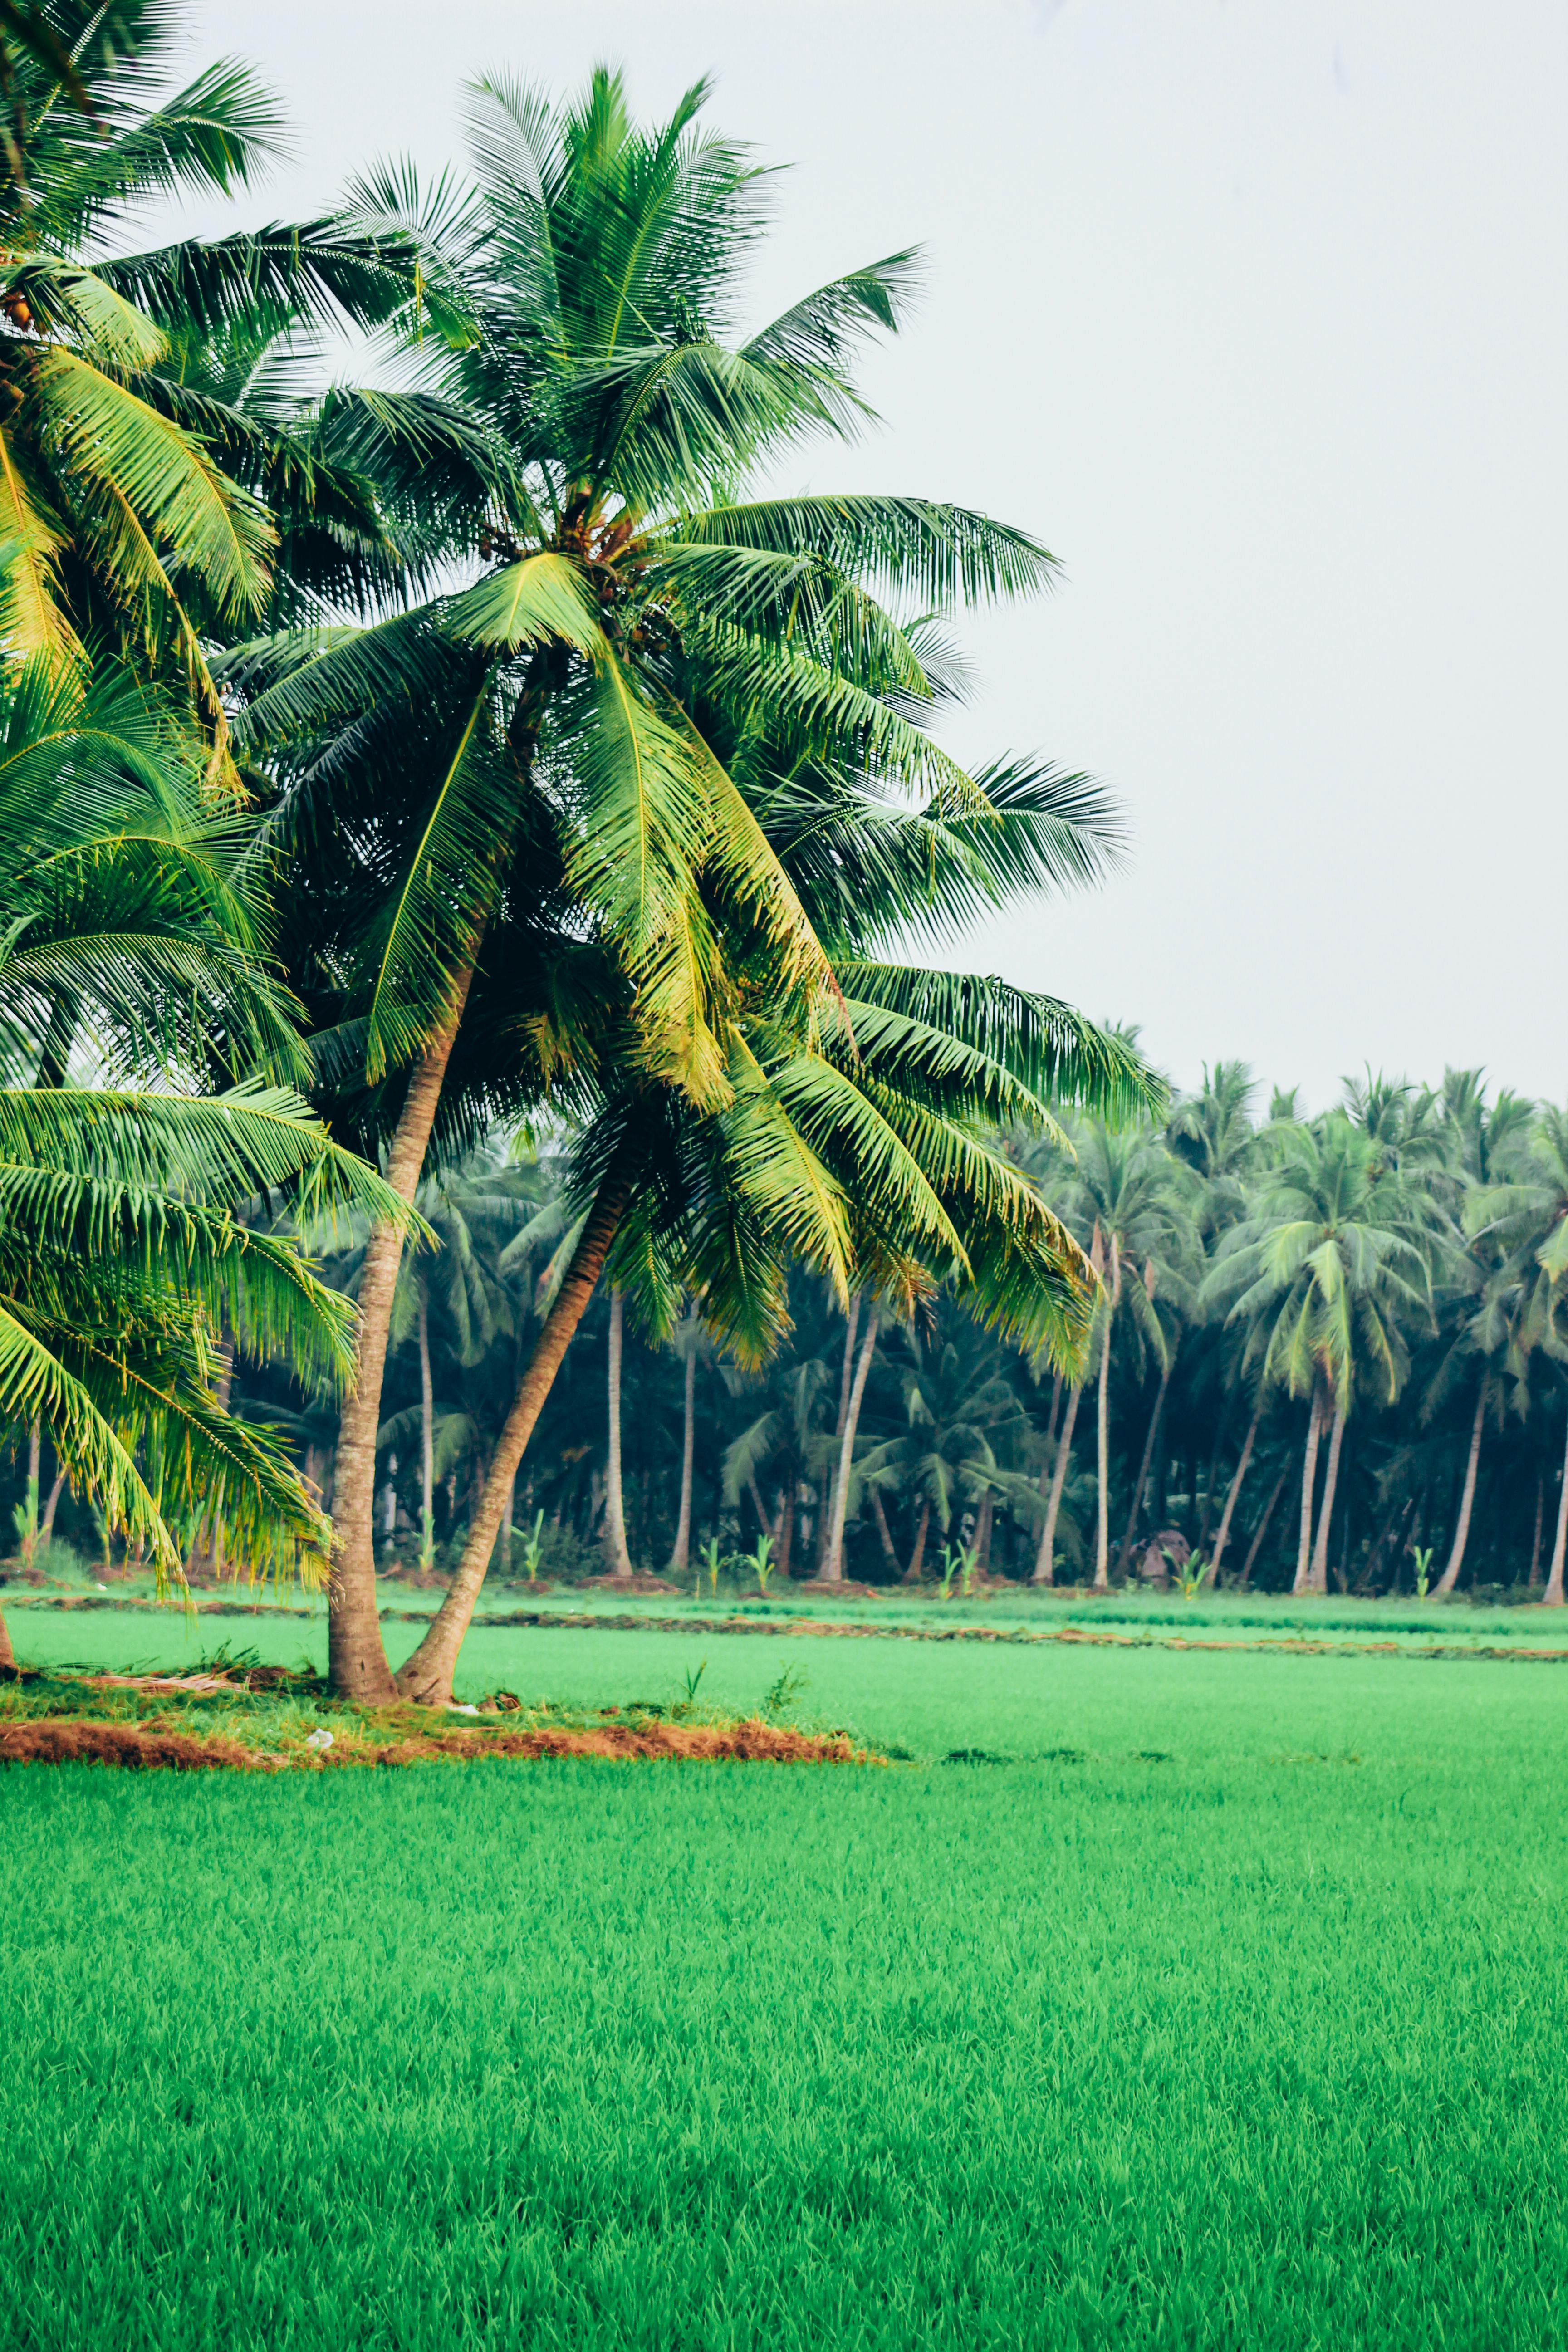 Green Coconut Trees on Green Field · Free Stock Photo